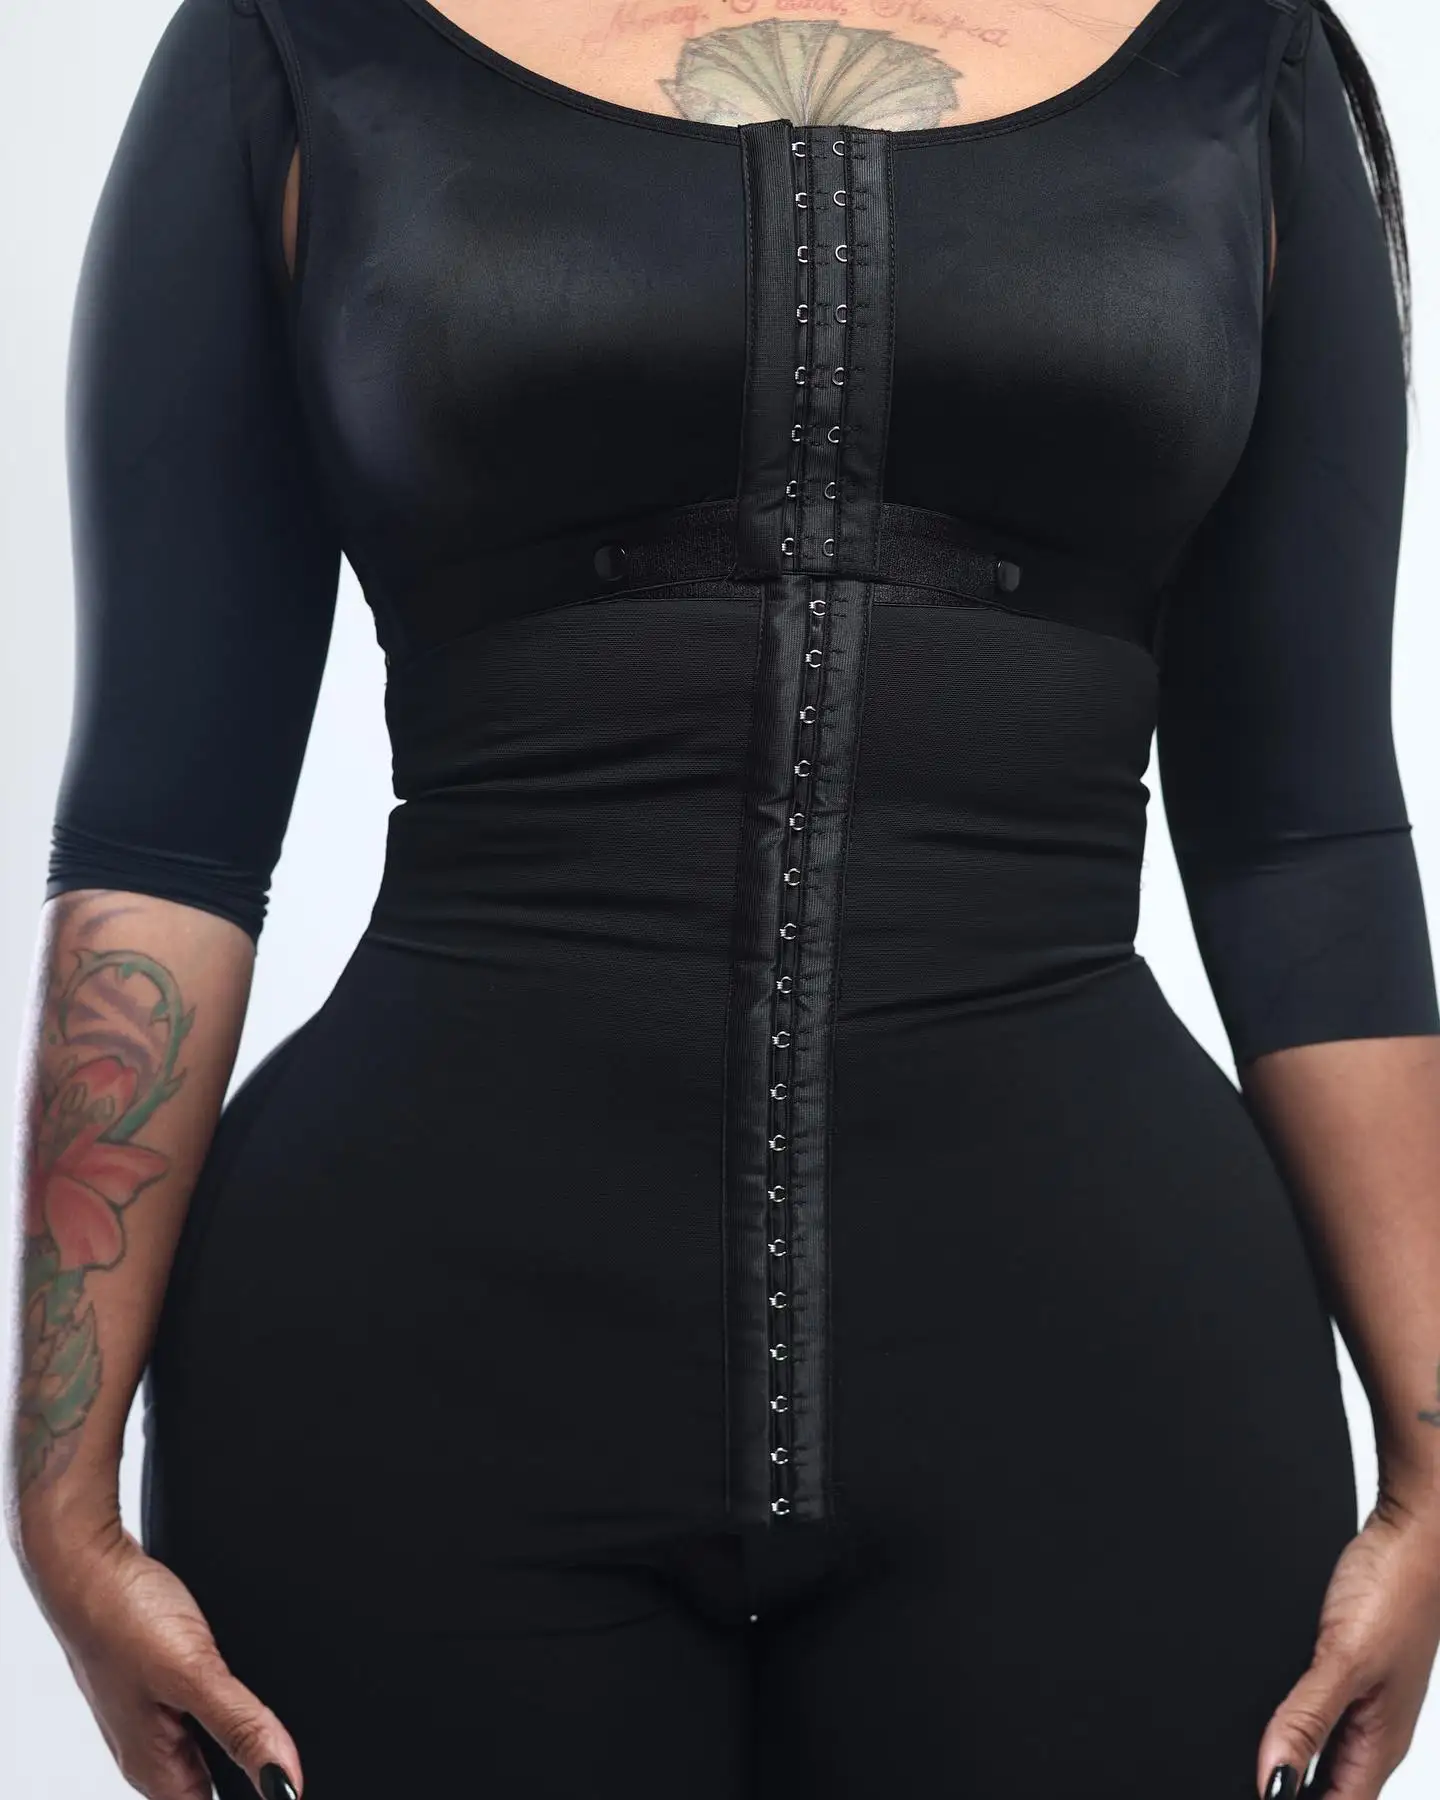 

Women Shapewear Fajas Colombiana High Compression Skims Underwear Control Tummy Buttocks Hourglass Girdle